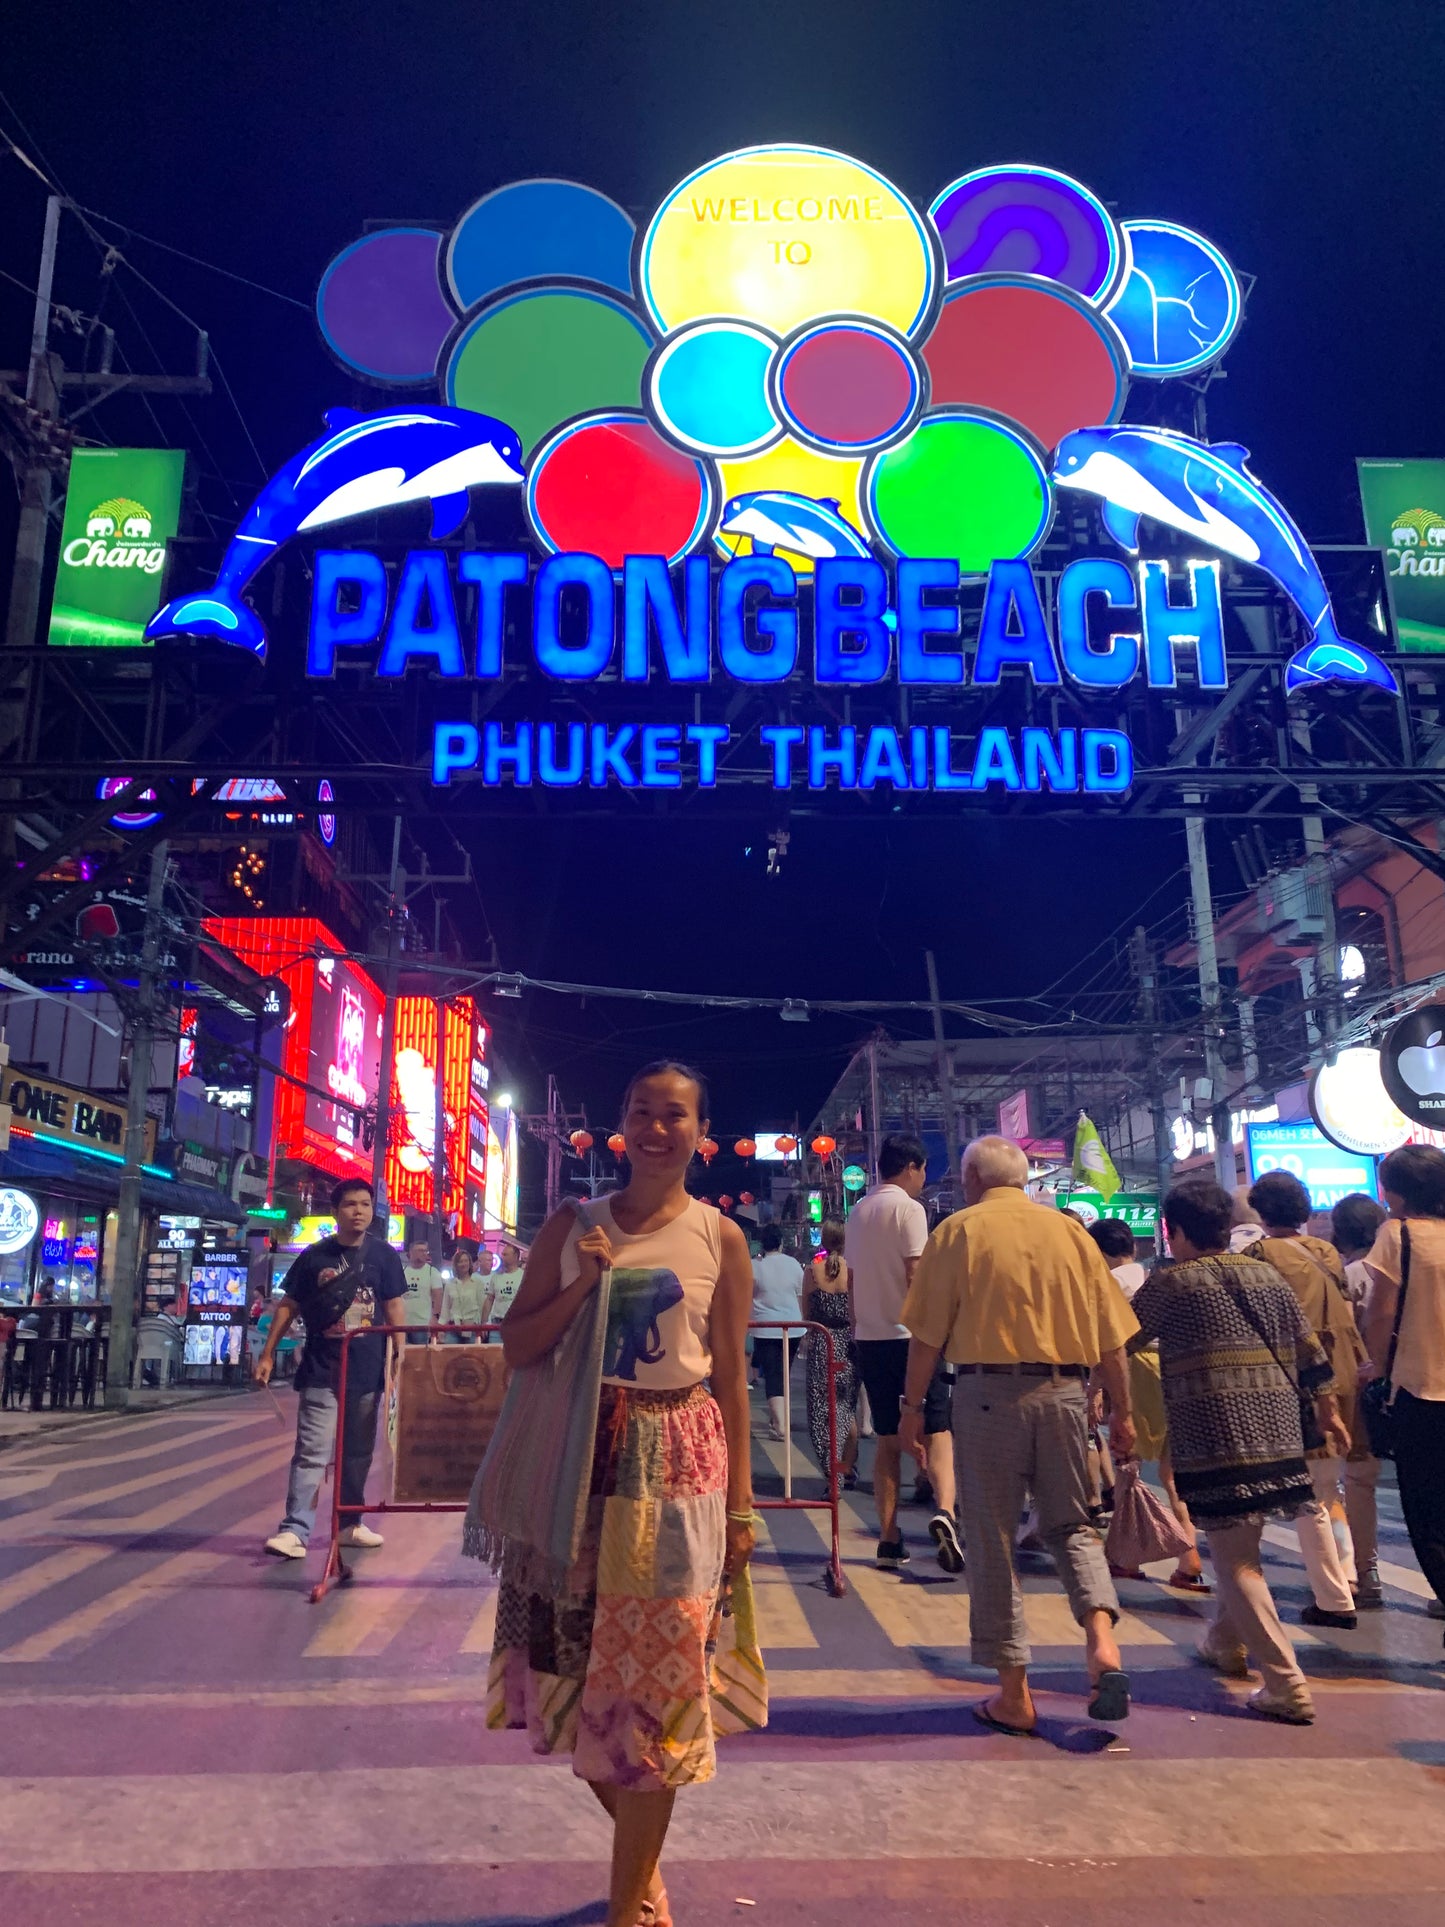 A9C: (3 Days) Phuket, THAILAND, Coastal Adventure And Cultural Discovery